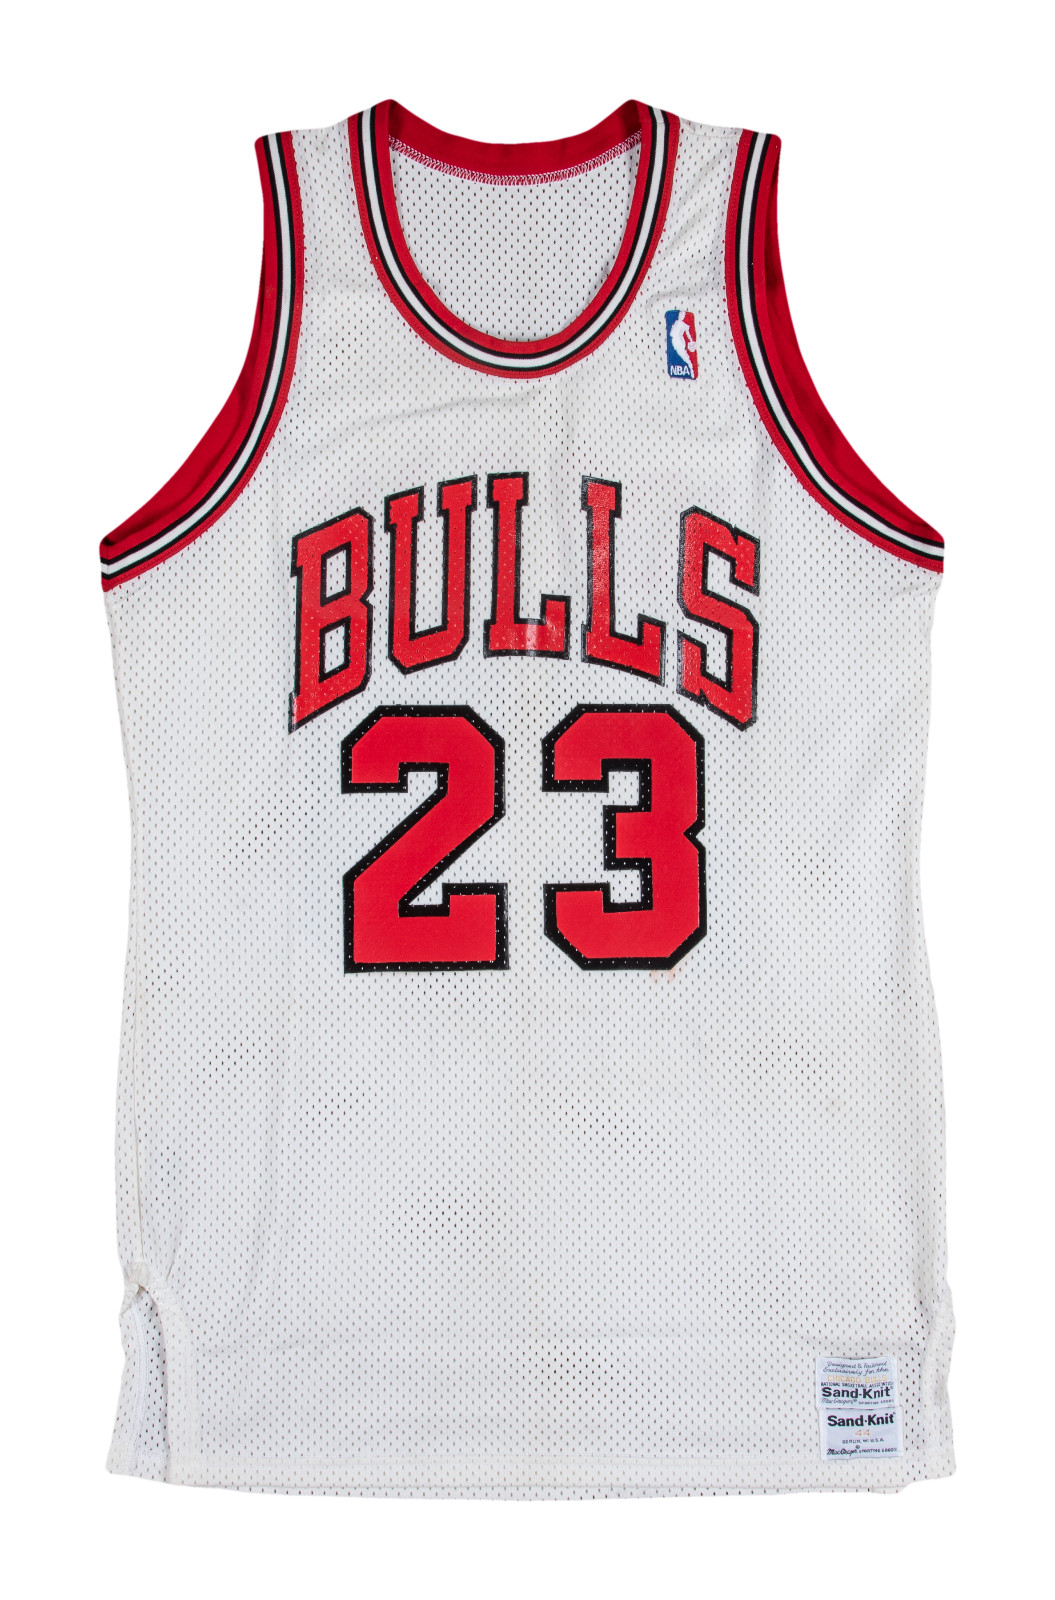 1986 bulls jersey